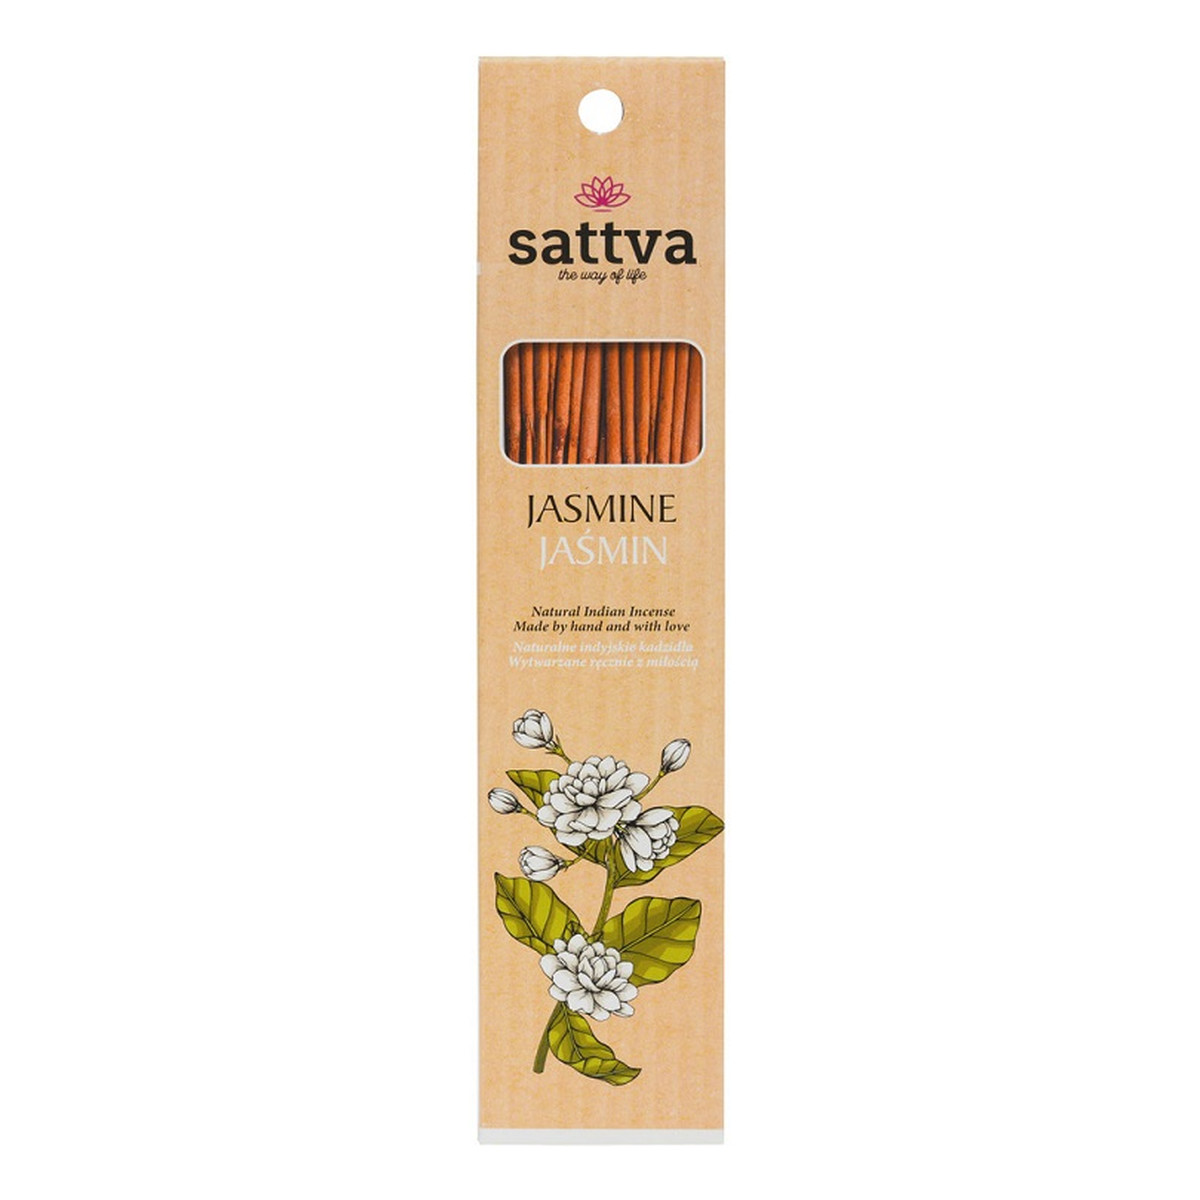 Sattva Natural Indian Incense Naturalne indyjskie kadzidełko Jasmine - Jaśmin 15 szt.